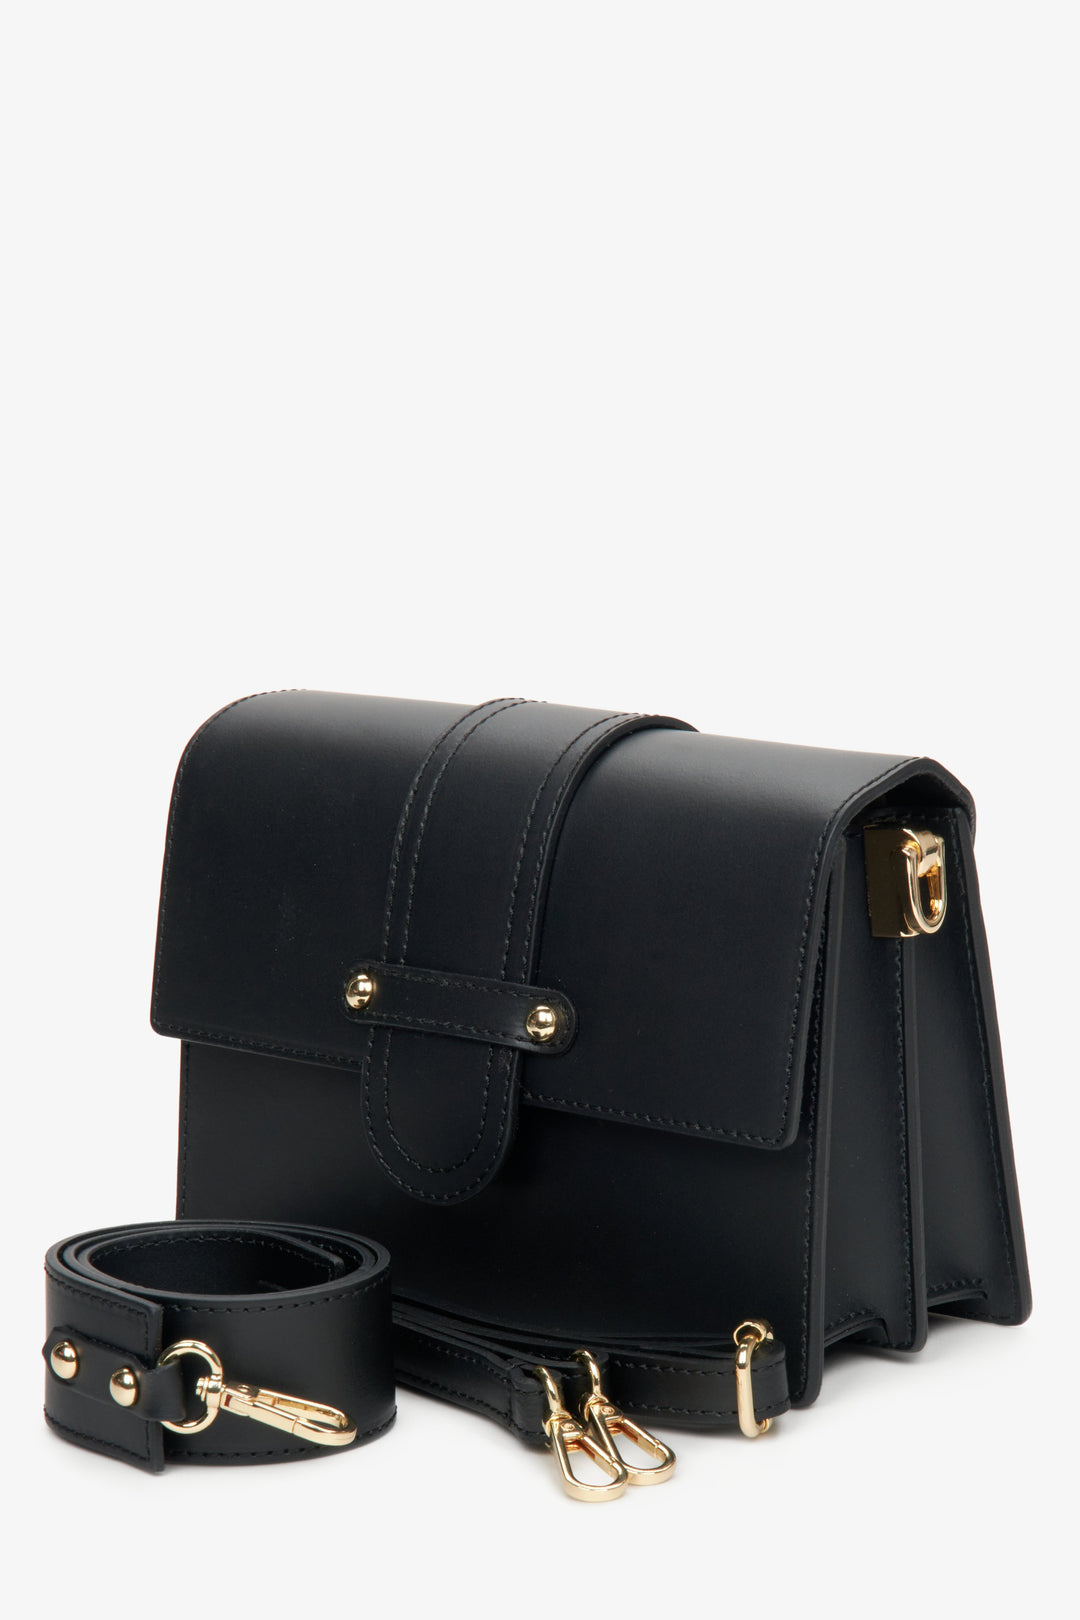 Women's black handbag by Estro with two straps.